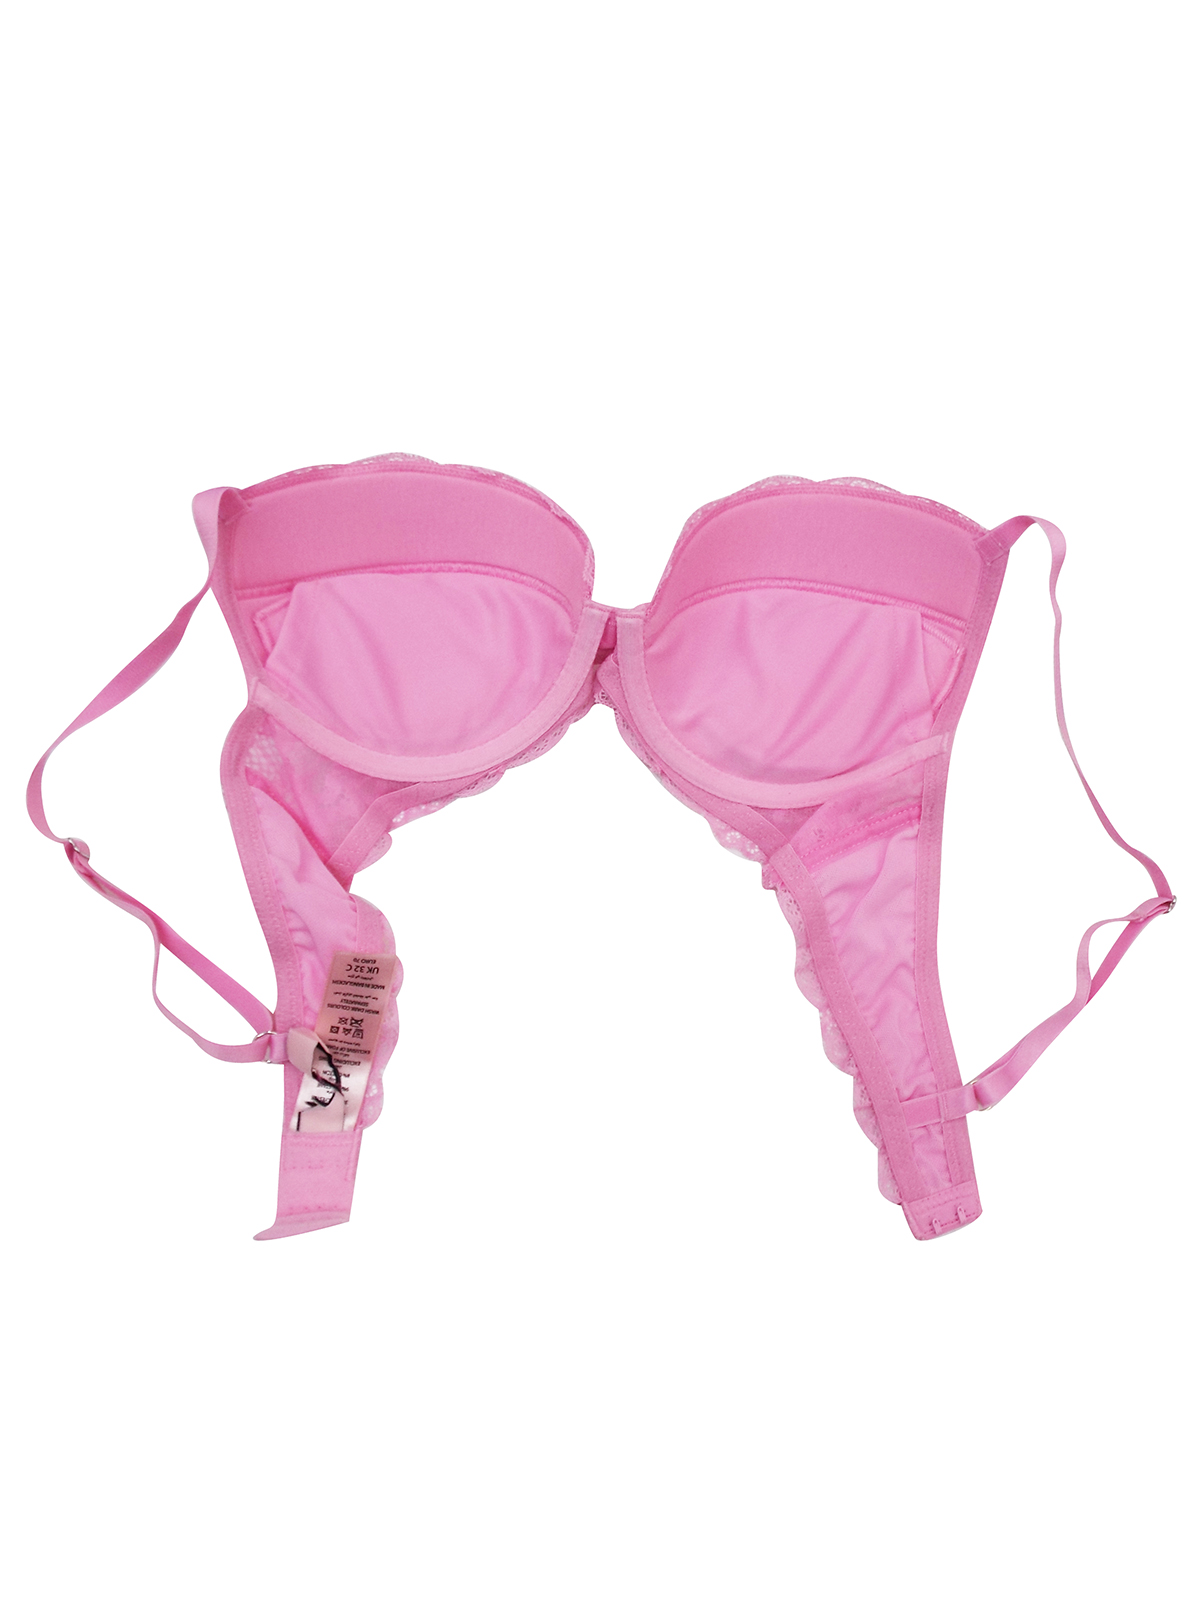 Boux Avenue Amber plunge bra - Pink - 38G, £30.00